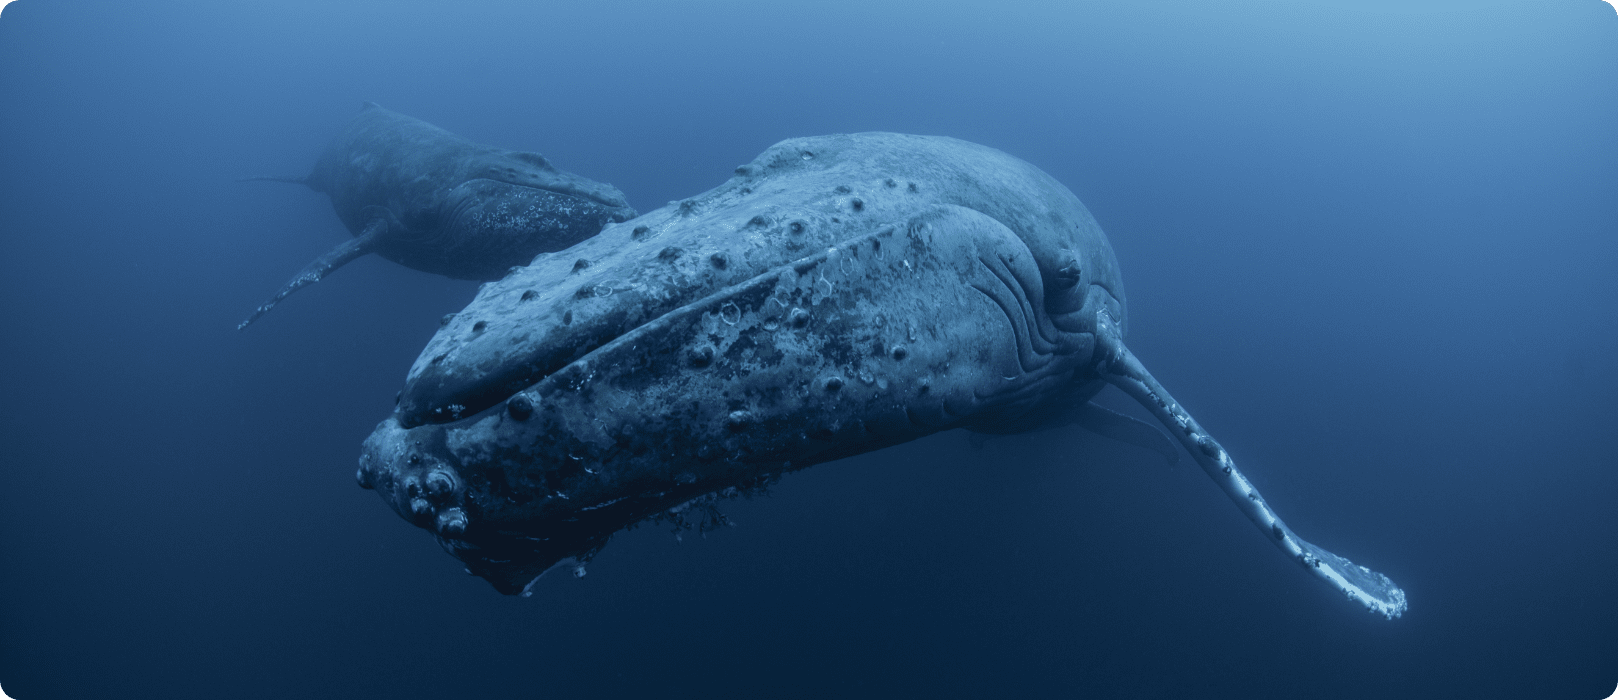 underwater-view-of-humpback-whale-revillagigedo-i-2022-03-07-23-53-47-utc@2x